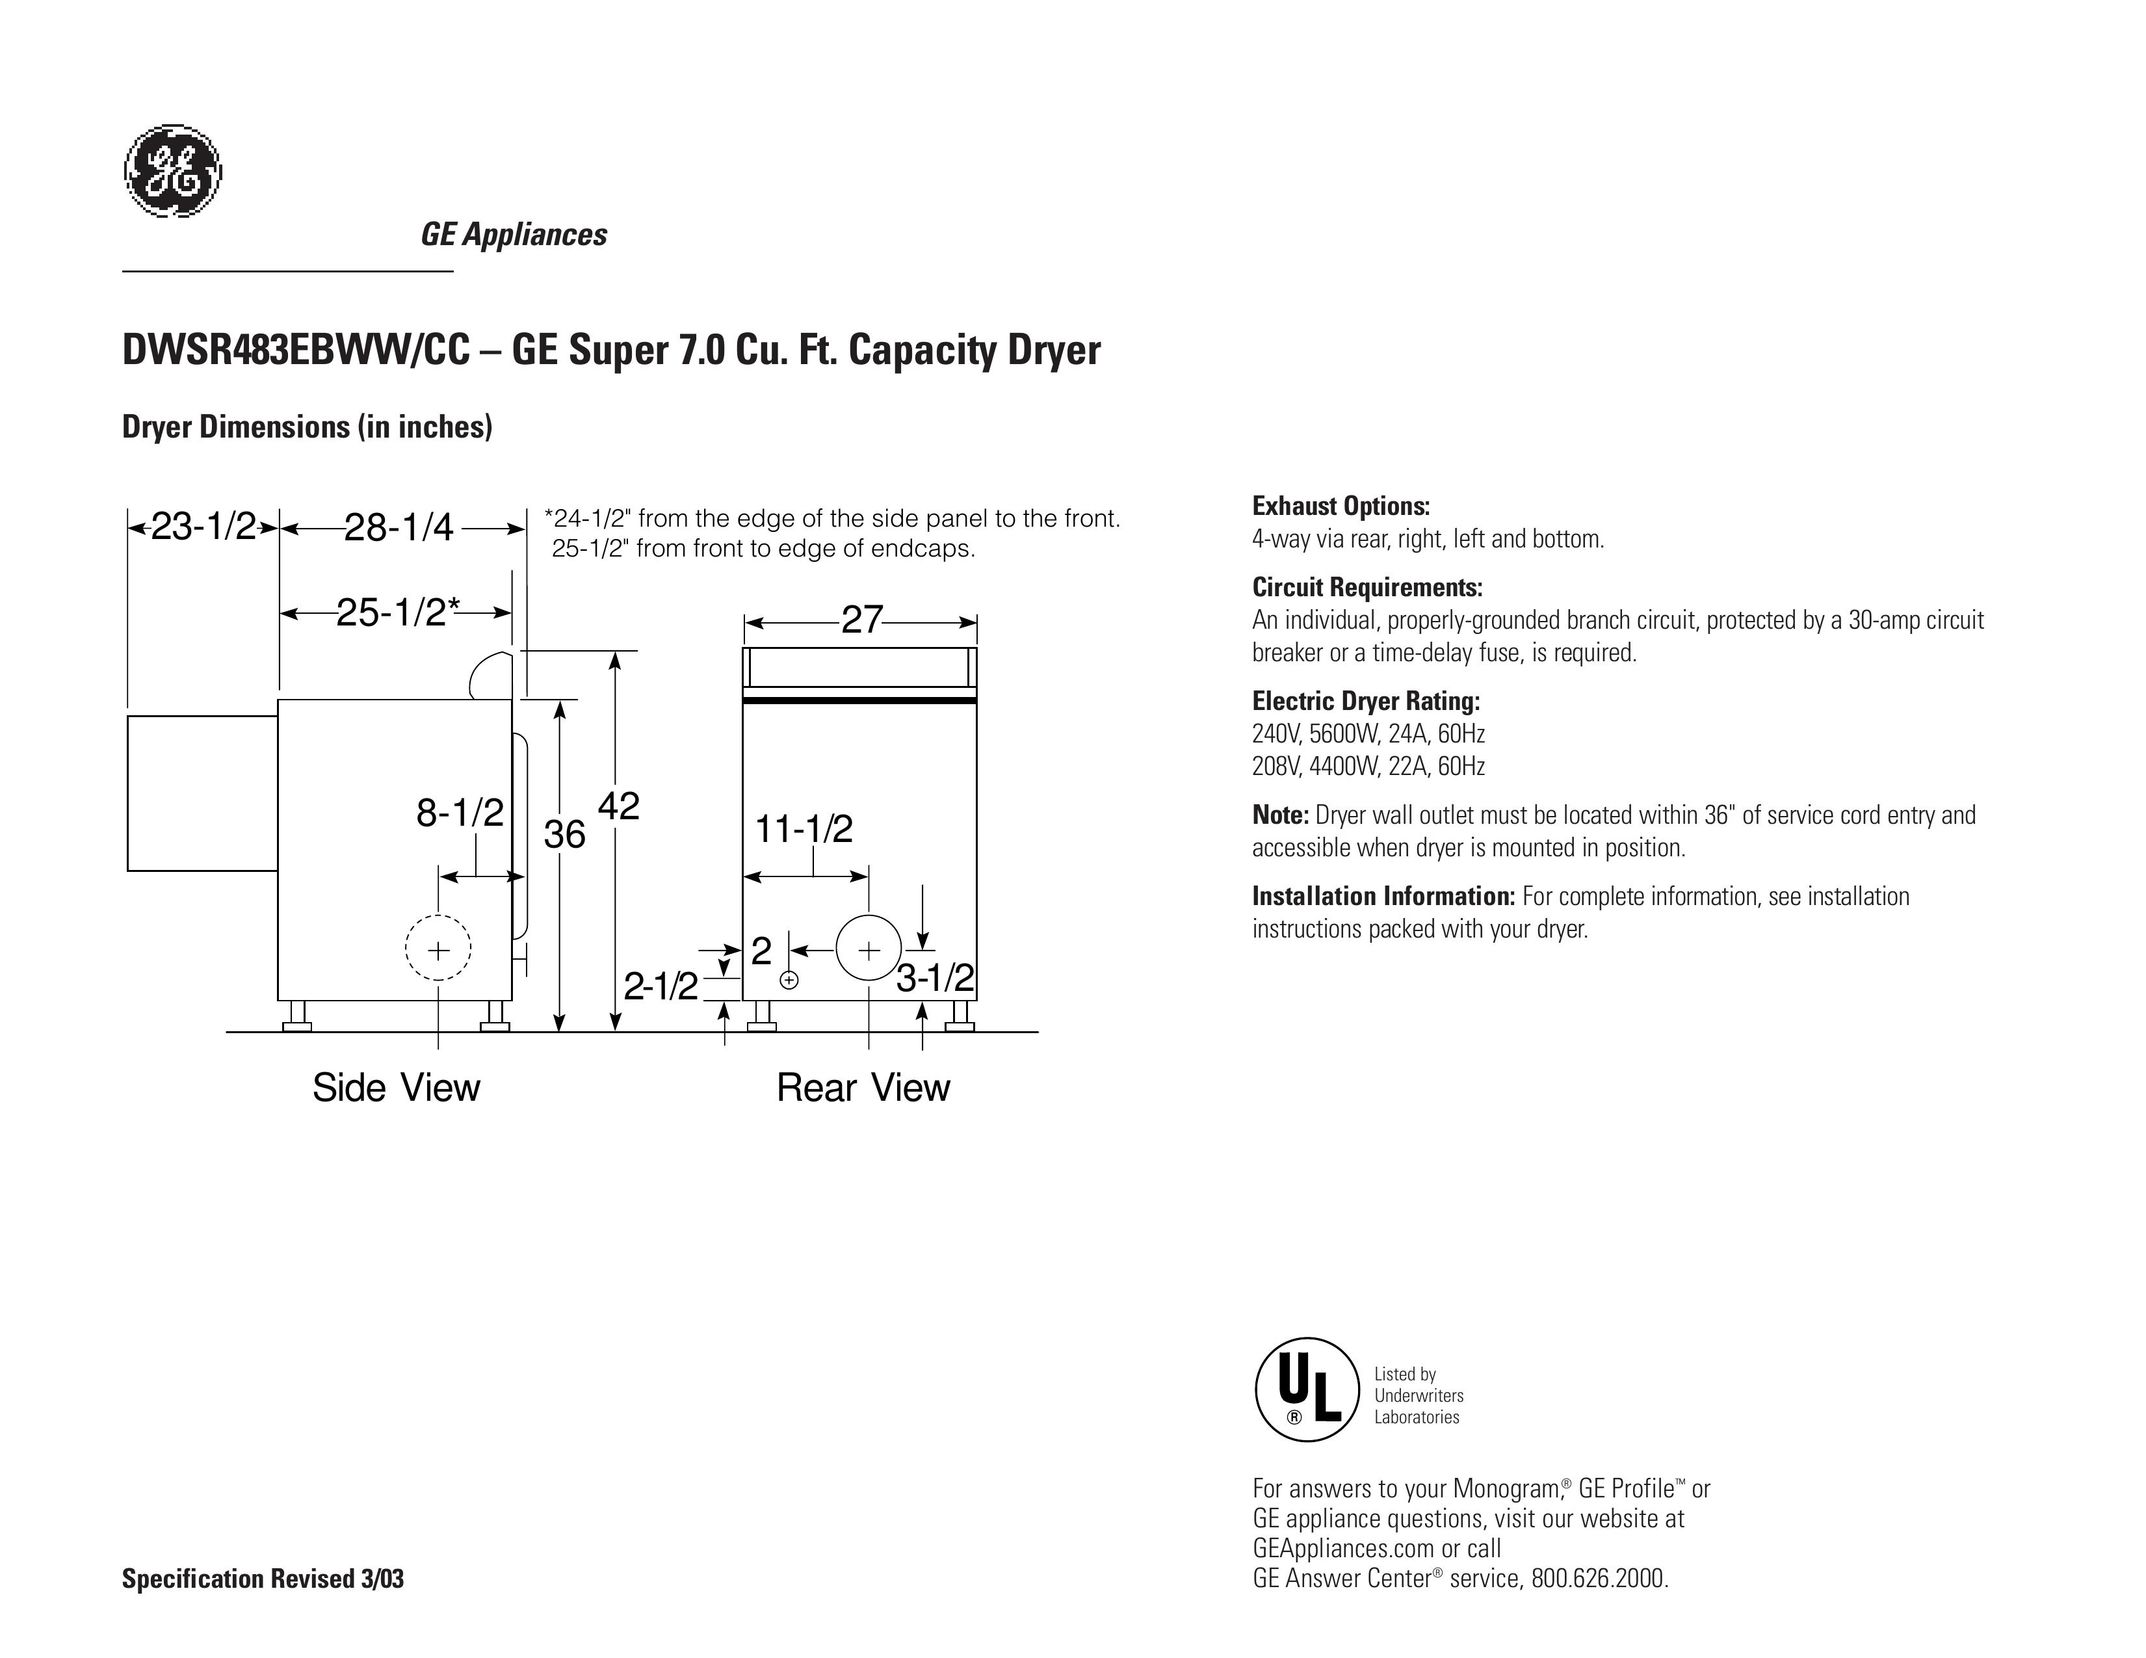 GE DWSR483EBWW/CC DVR User Manual